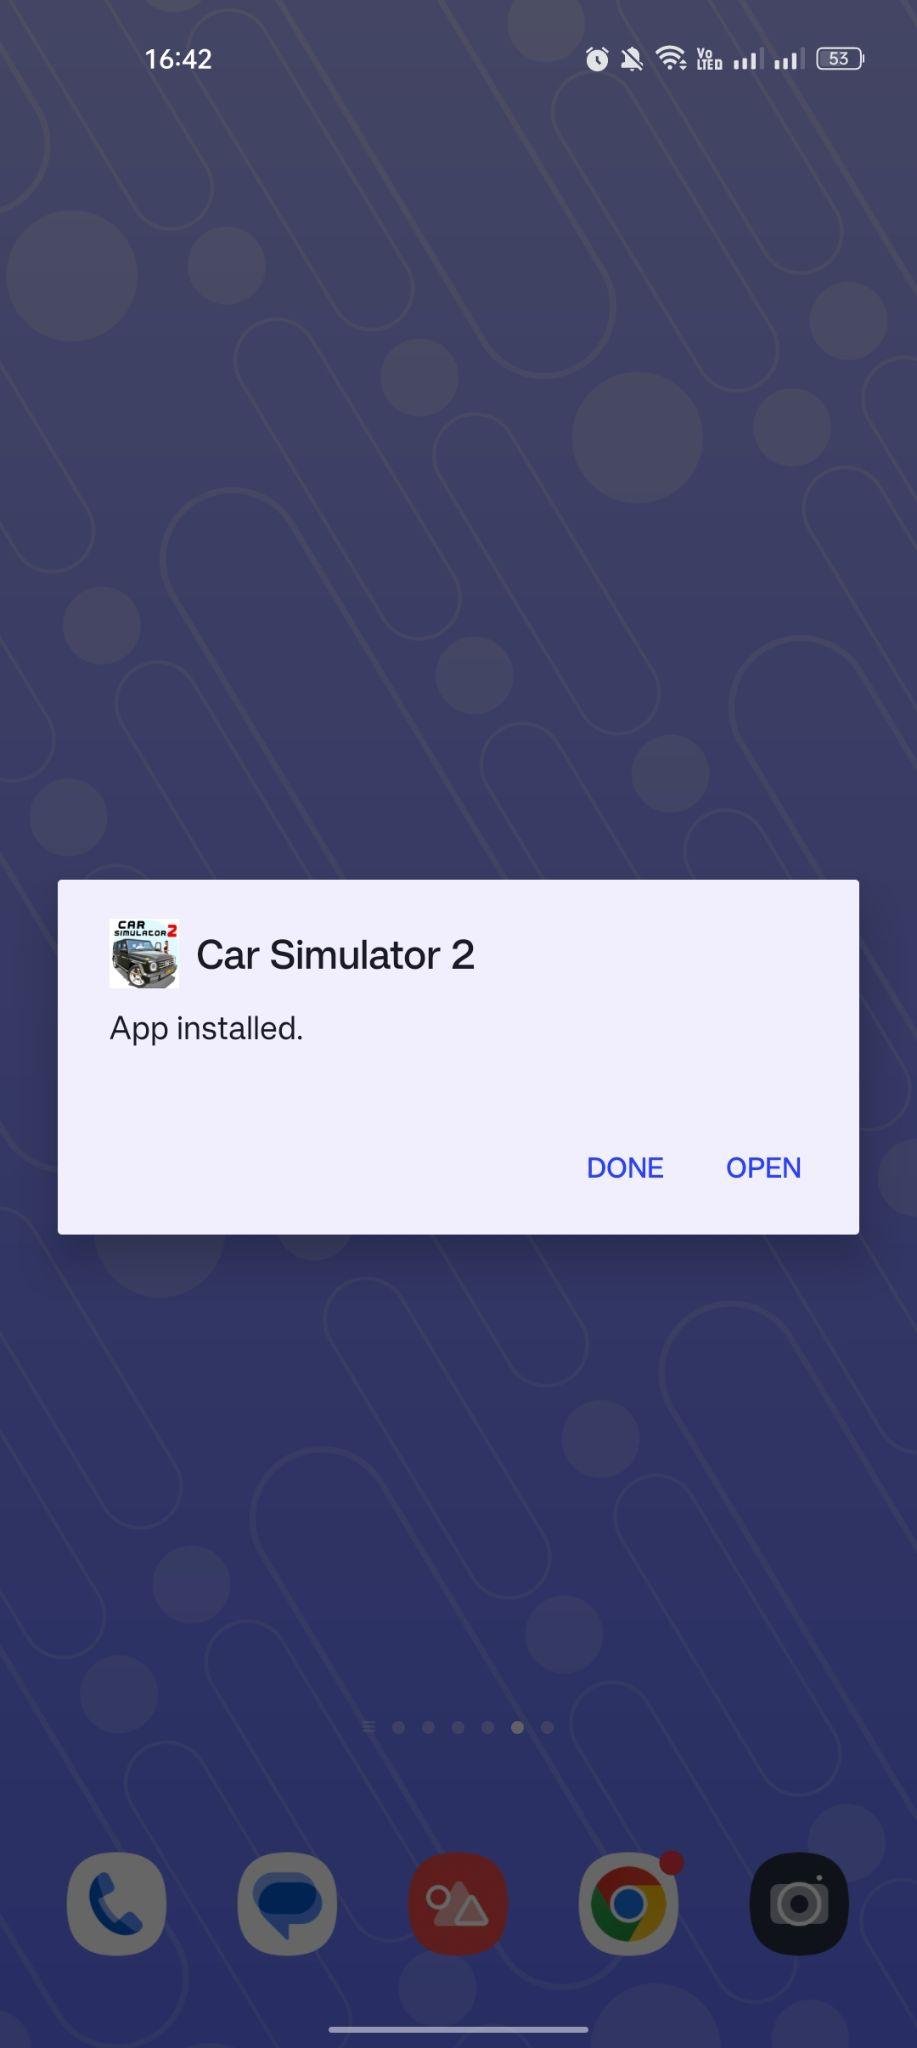 Car Simulator 2 apk installed